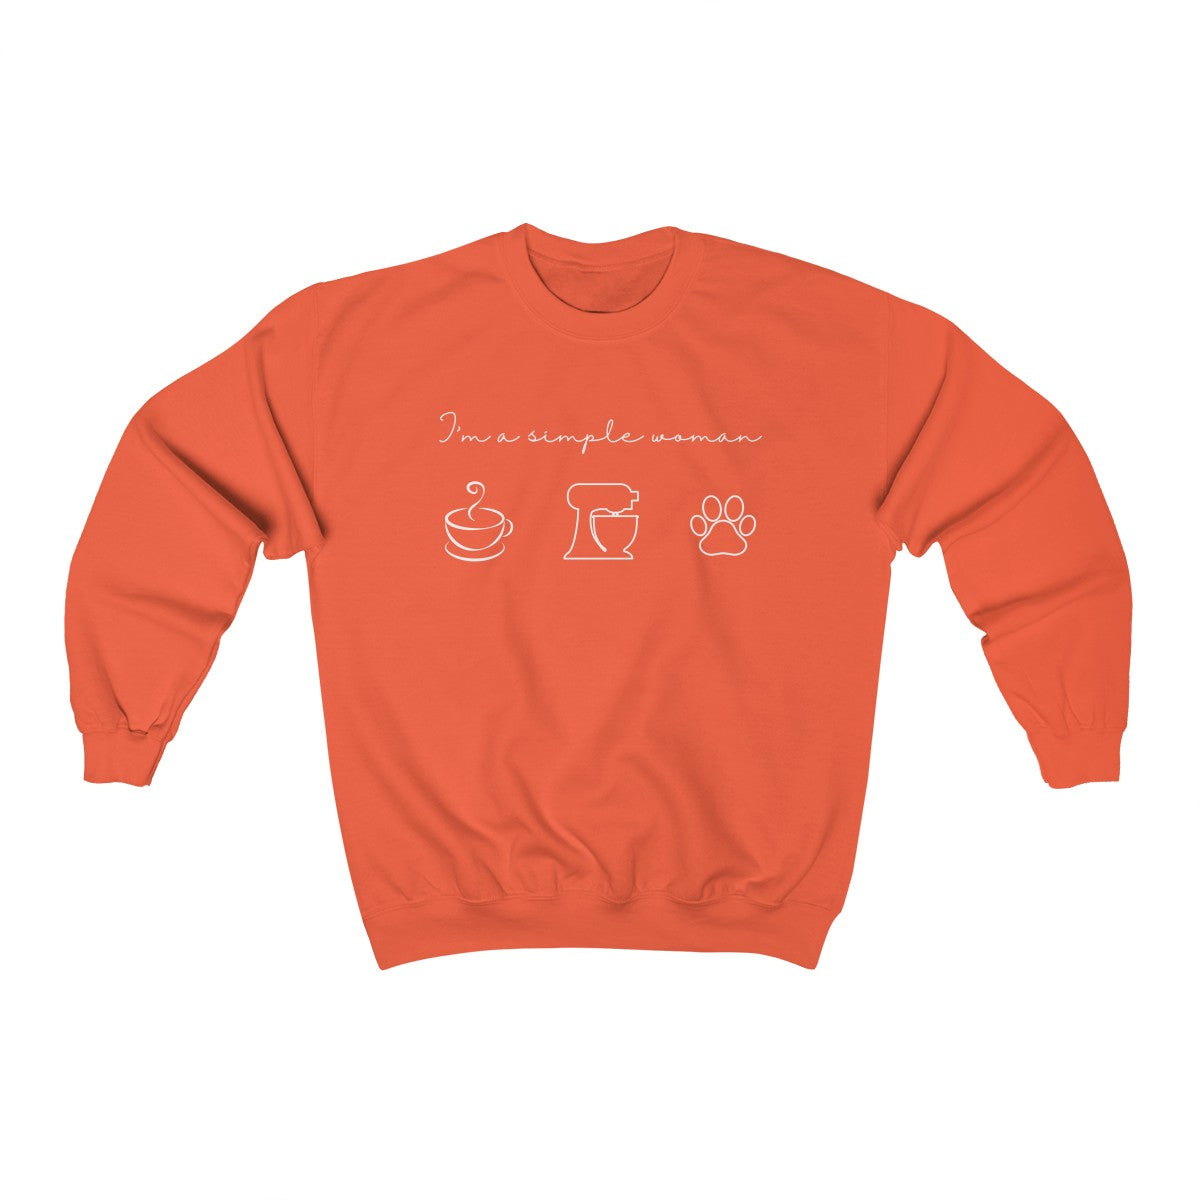 adviicd Orange Sweater Women's Cotton Crewneck Sweater 